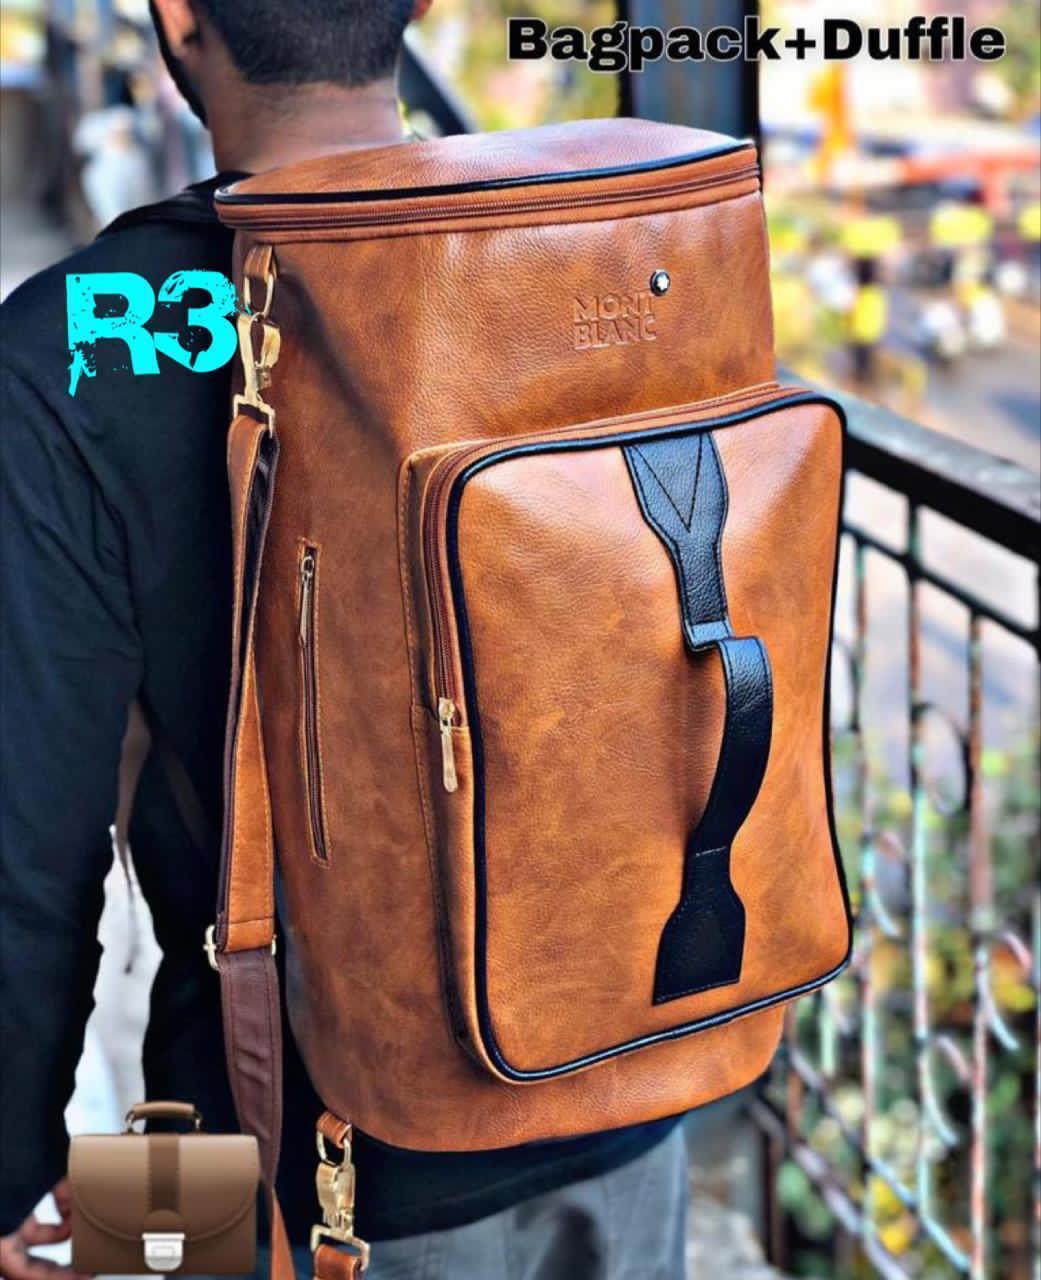 Buy Impulse Rucksack bags 60 litres travel bag for men tourist bags for travel  backpack for hiking trekking Bag for men camping Keep Discovering Light  Black with 1 year Warranty at Amazonin